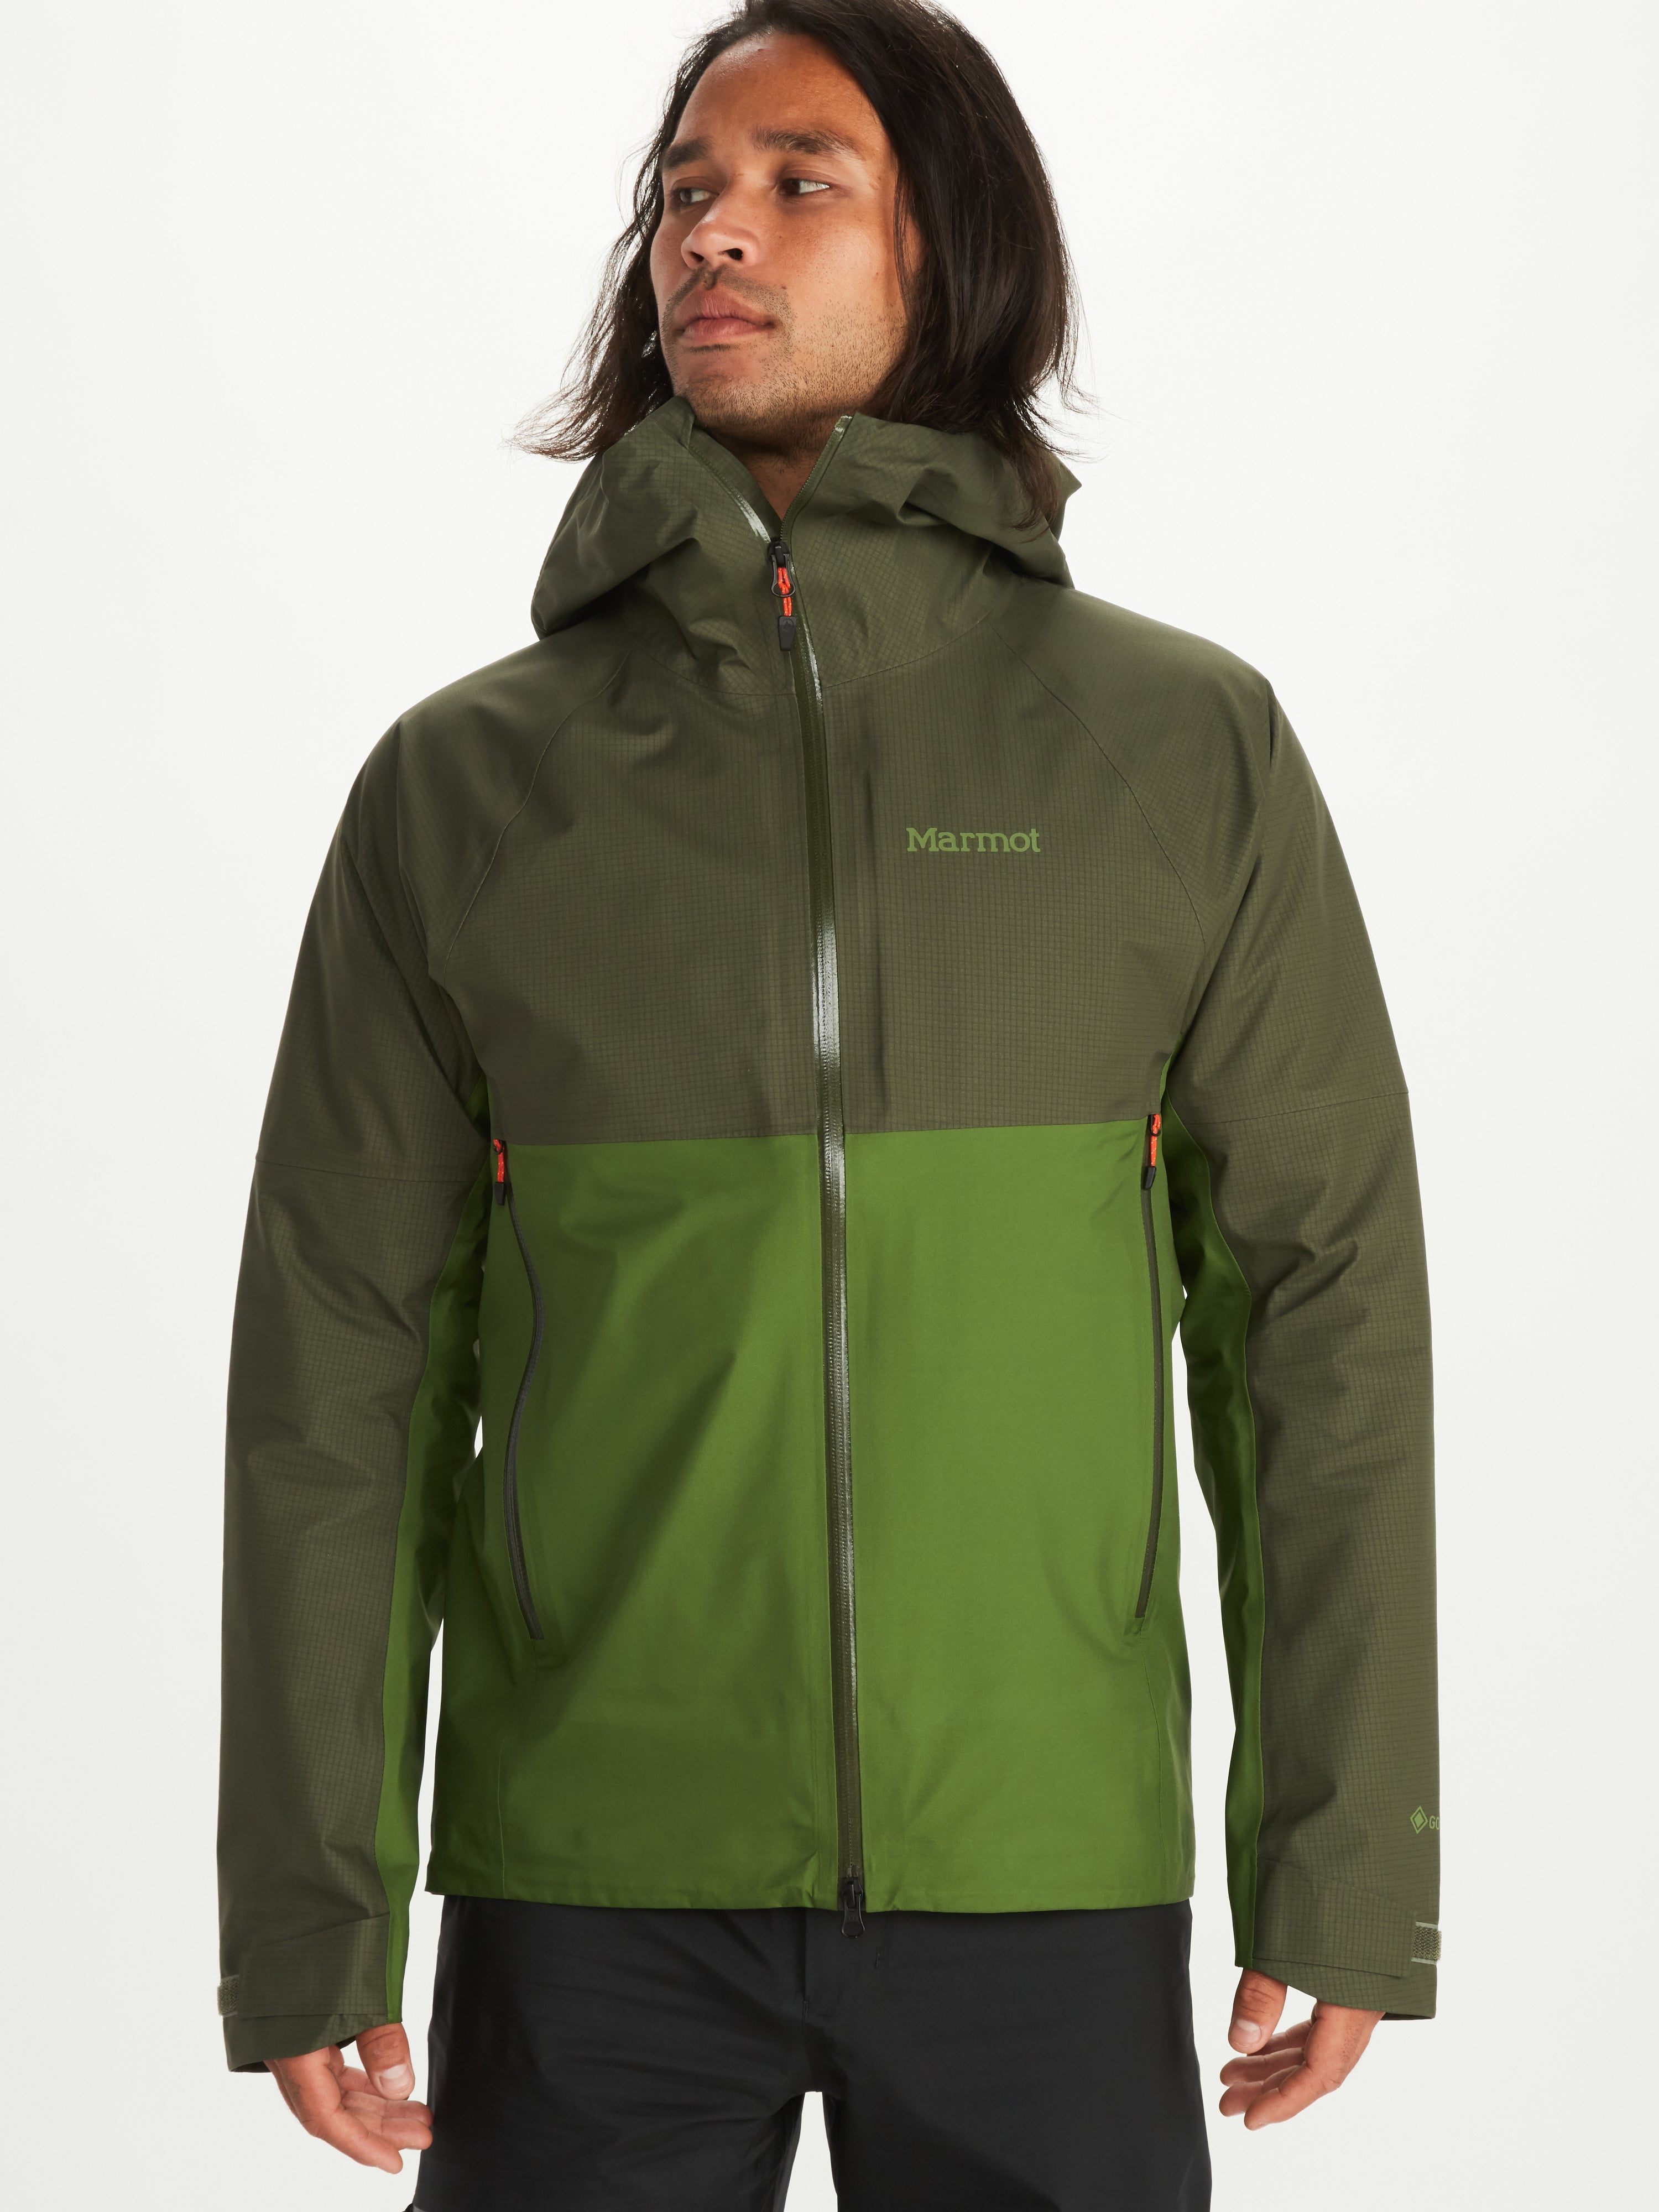 Mitre Peak GORE-TEX® Jacket – Marmot